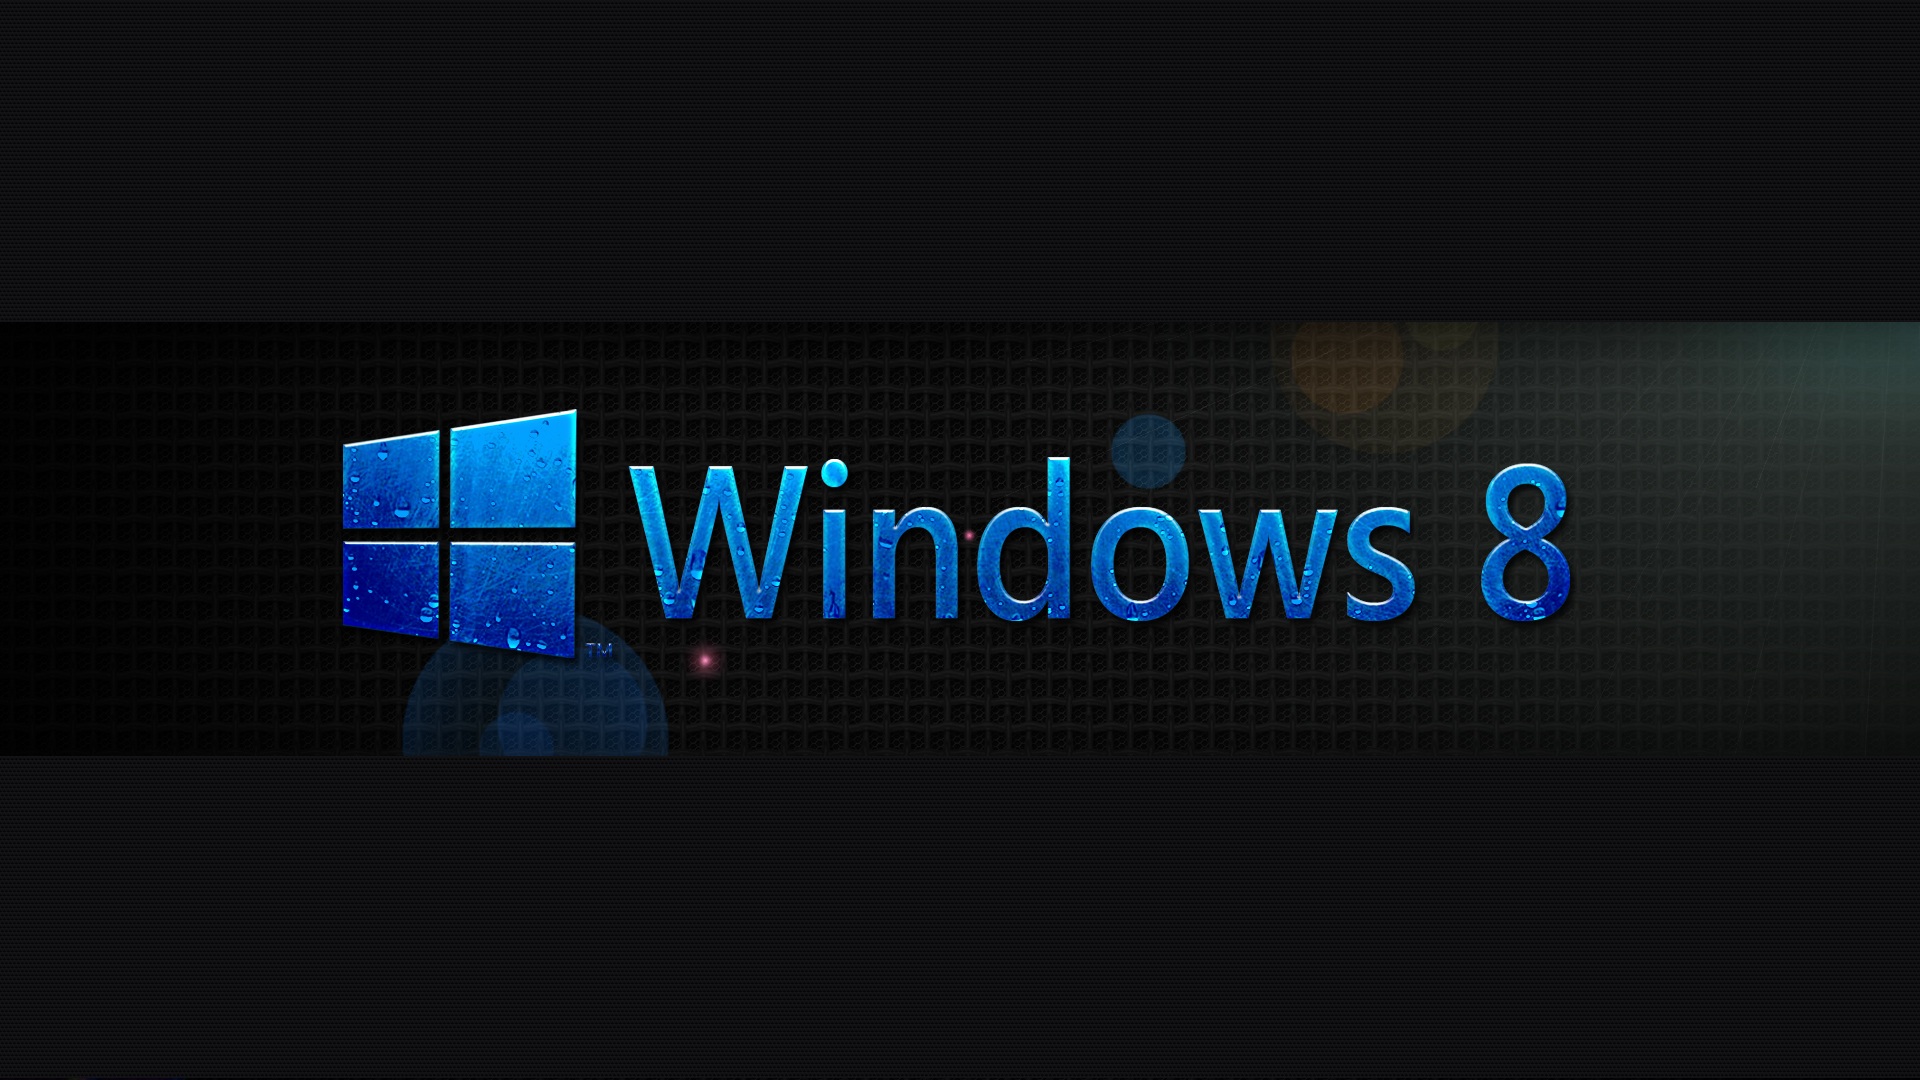 Windows 8 Wallpaper 2jpg